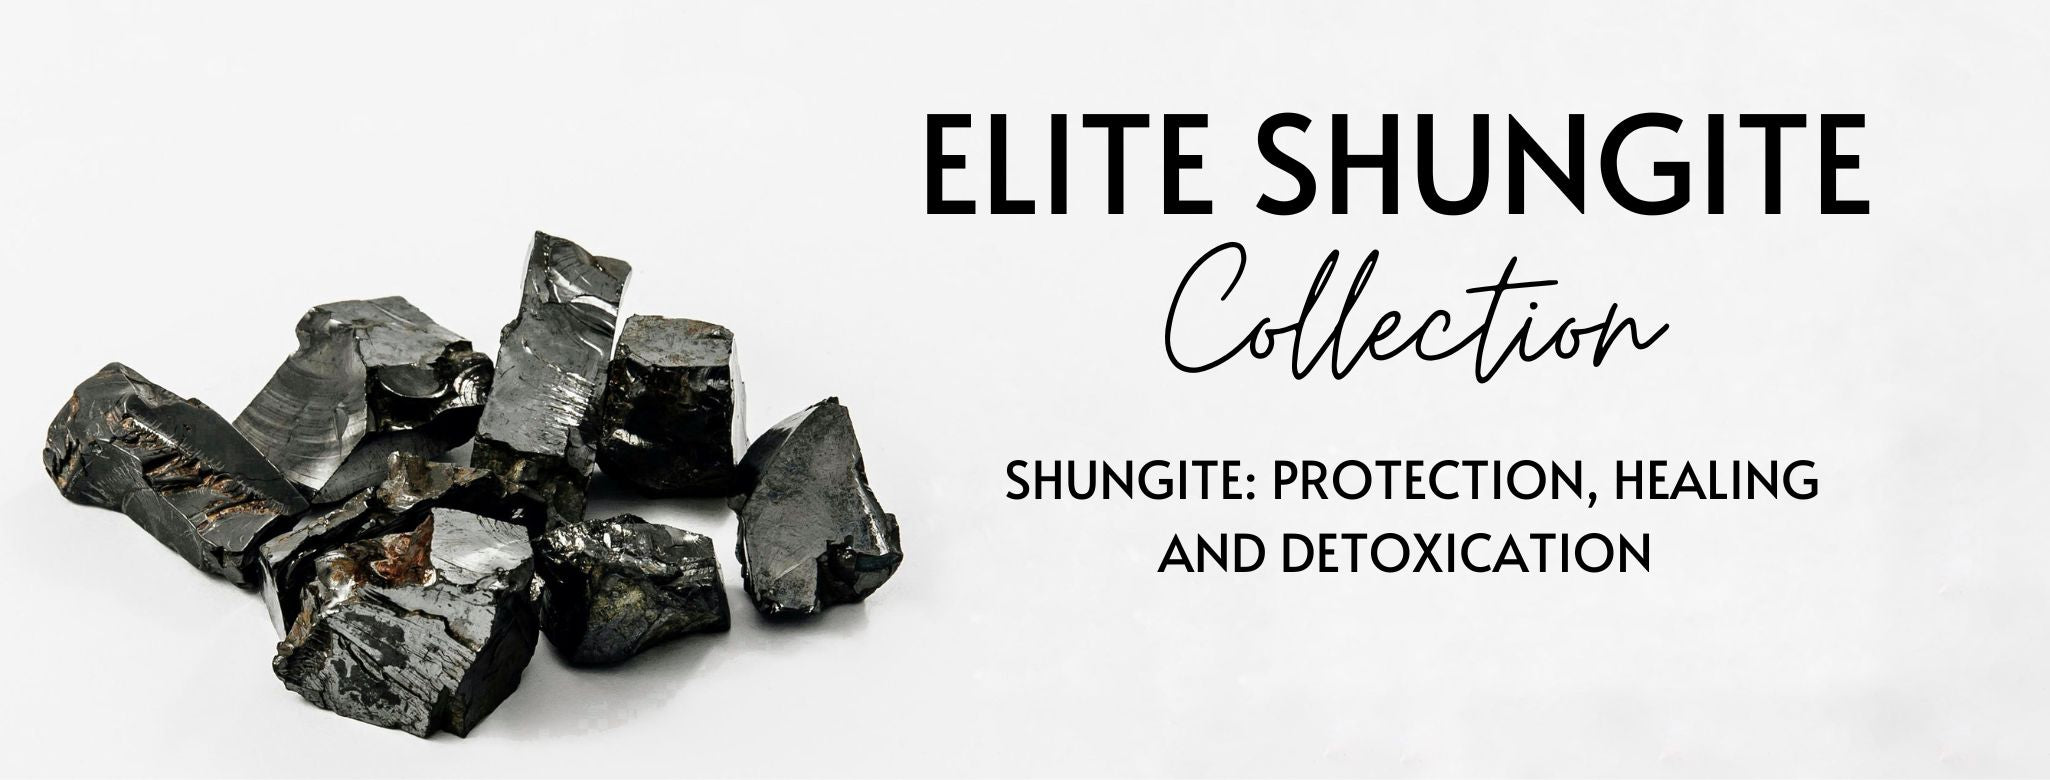 Elite Shungite properties, Elite shungite,  What is the best way to use Elite Shungite?  - MagicCrystals.Com